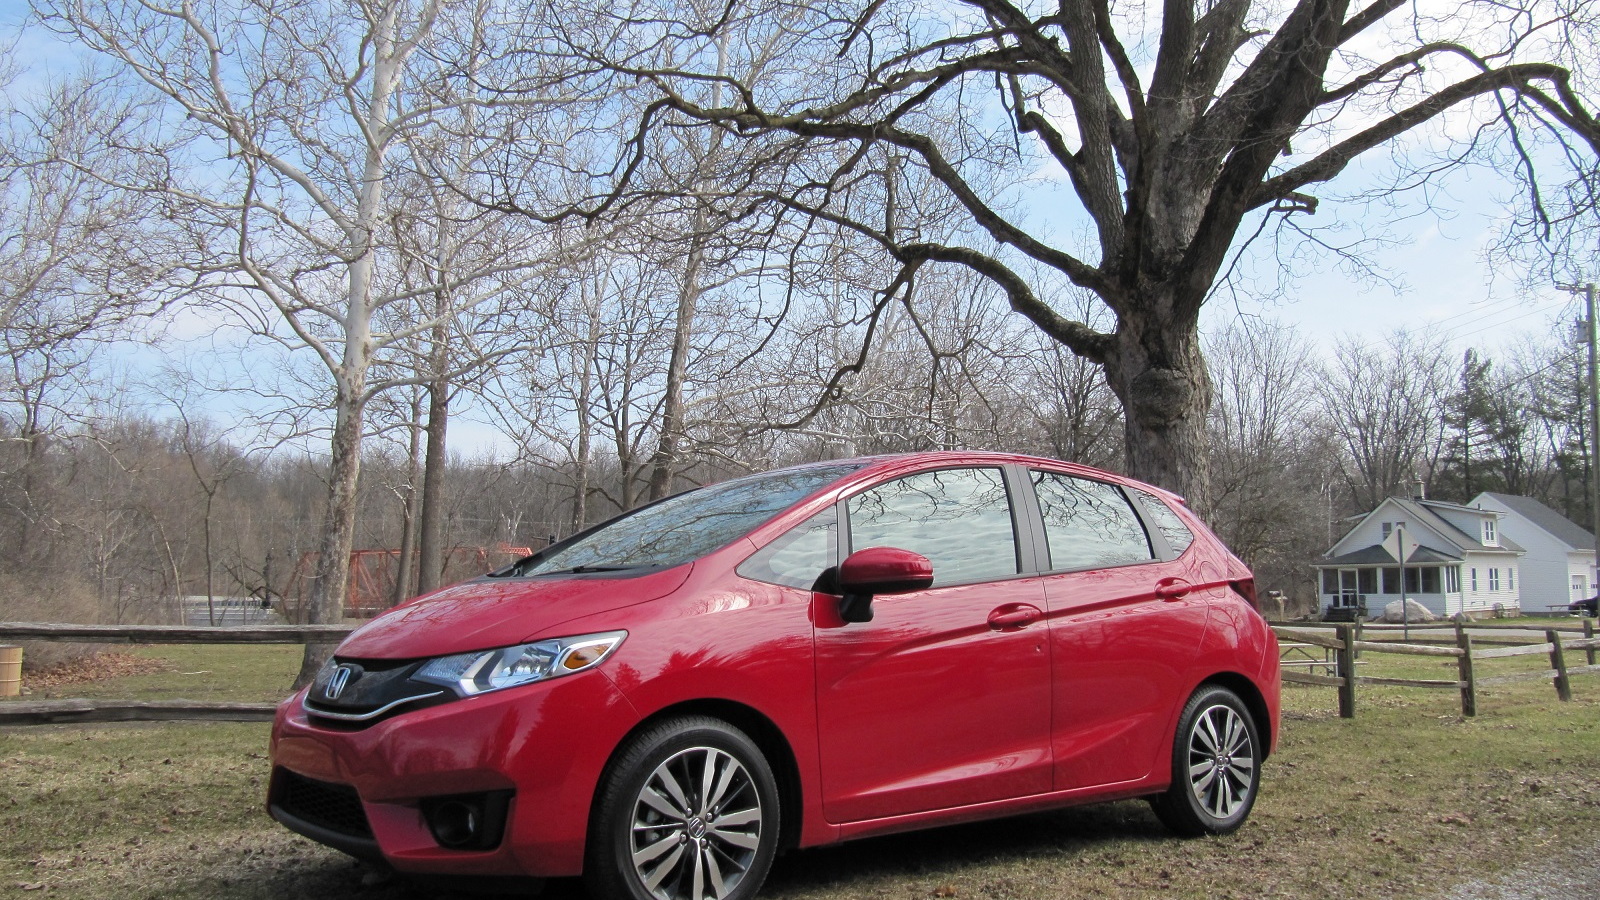 2015 Honda Fit, test drive around Ann Arbor, Michigan, Apr 2014